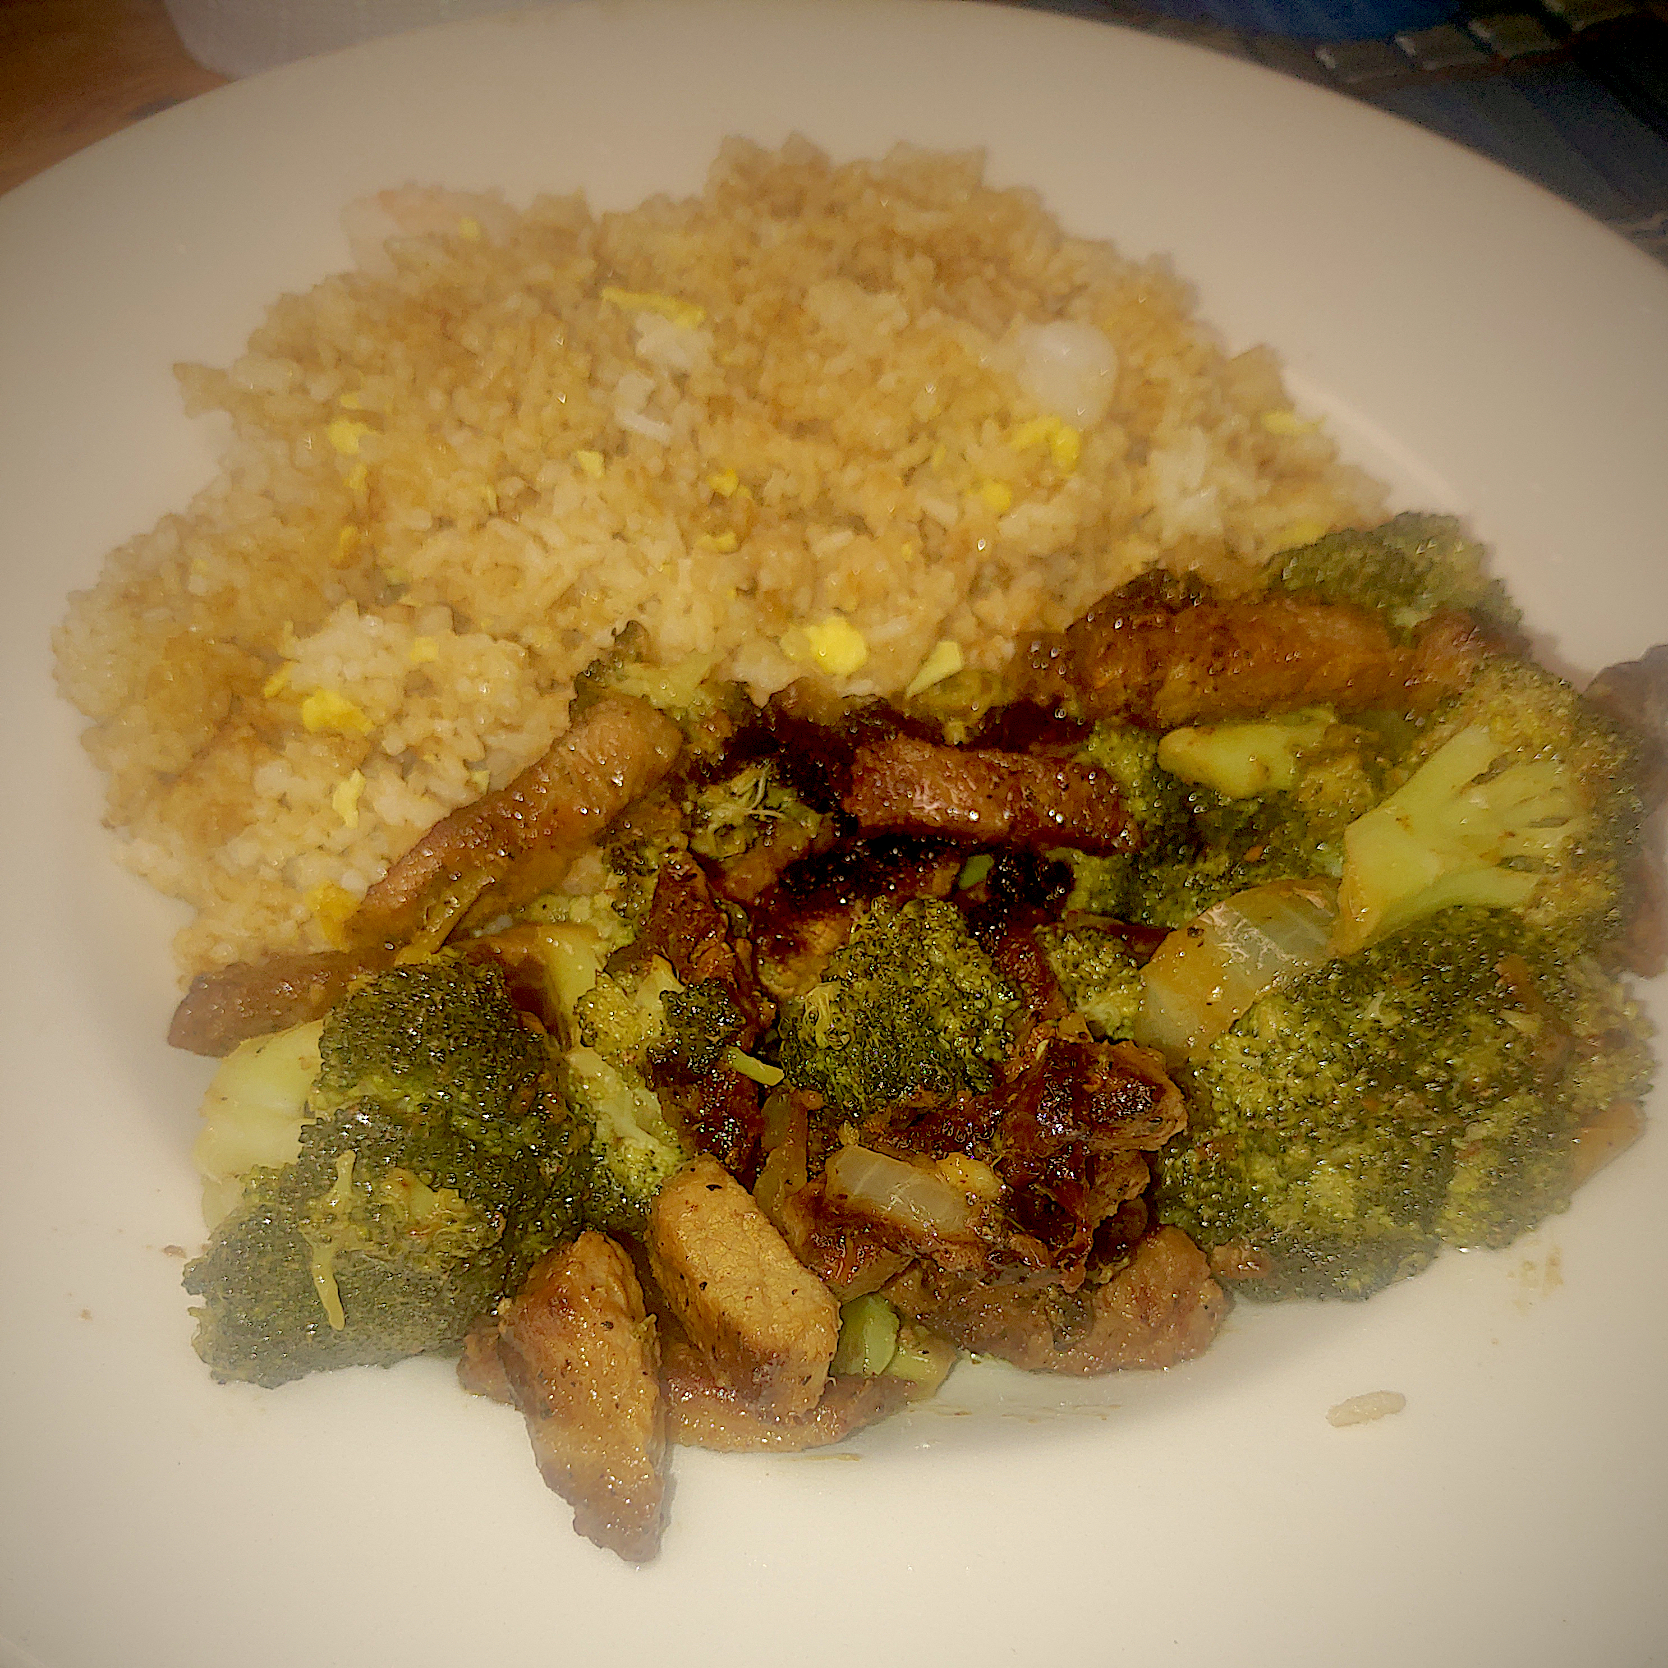 Beef & Broccoli with Stir Fry Rice